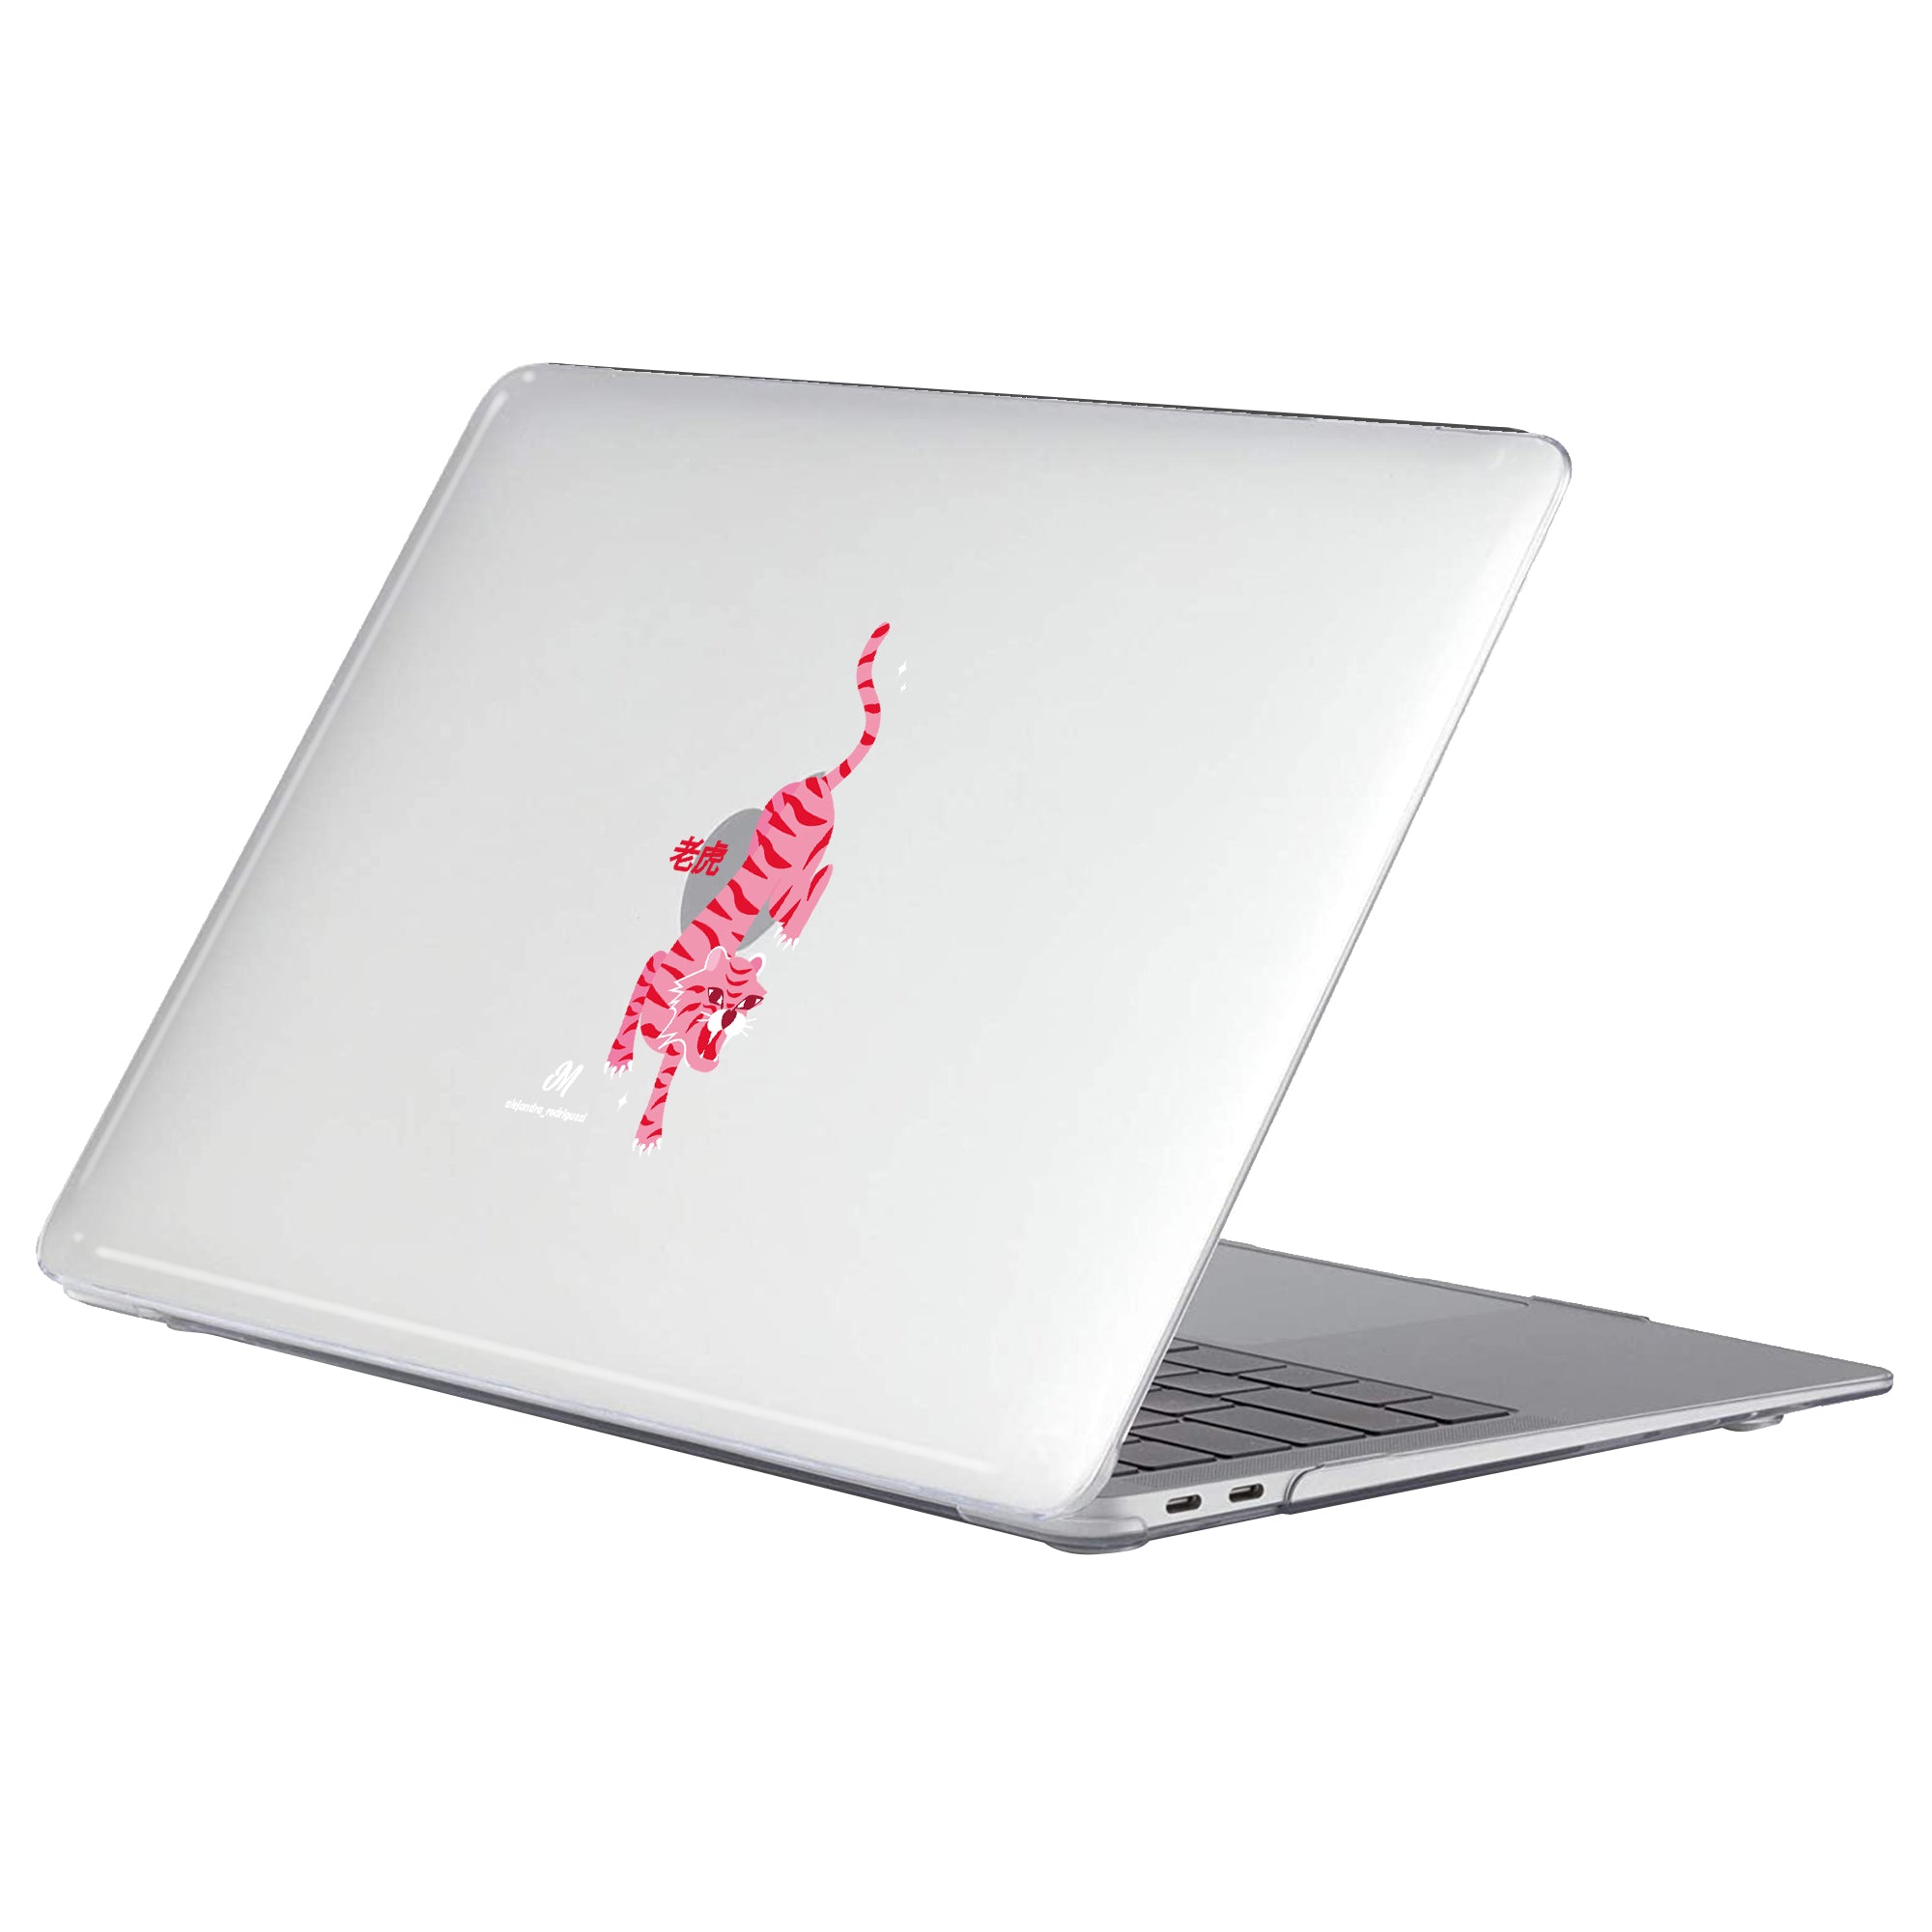 Tigre MacBook Case - Mandala Cases